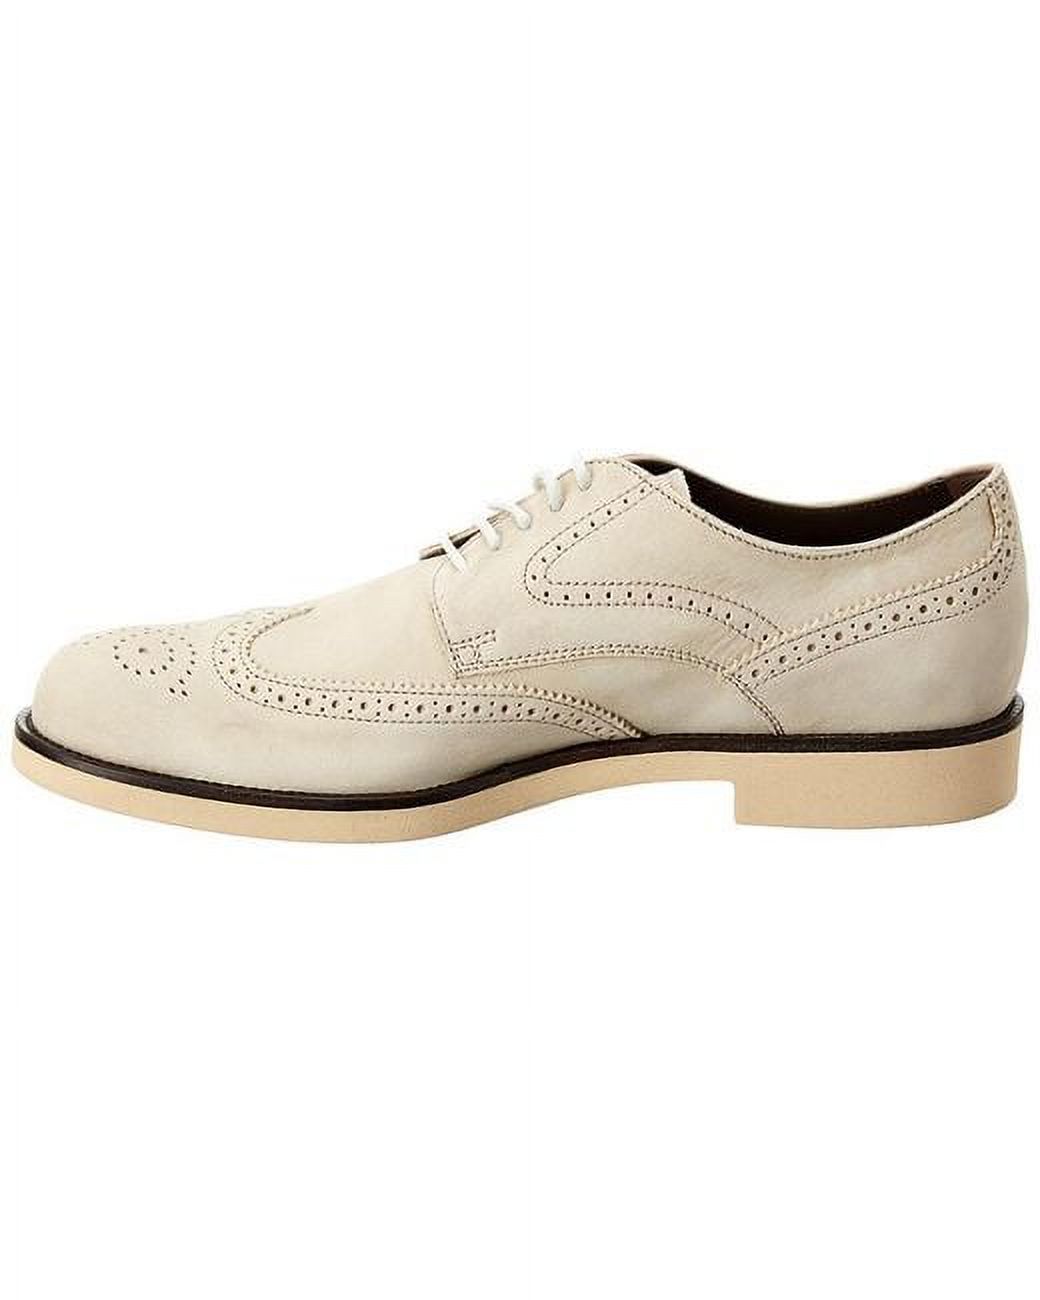 Tod's Men's Allacciato Natural Off White Suede Shoes Wingtip Lace Up Shoes (ARGILLA, 11.5 UK / 12.5 US) - image 2 of 3